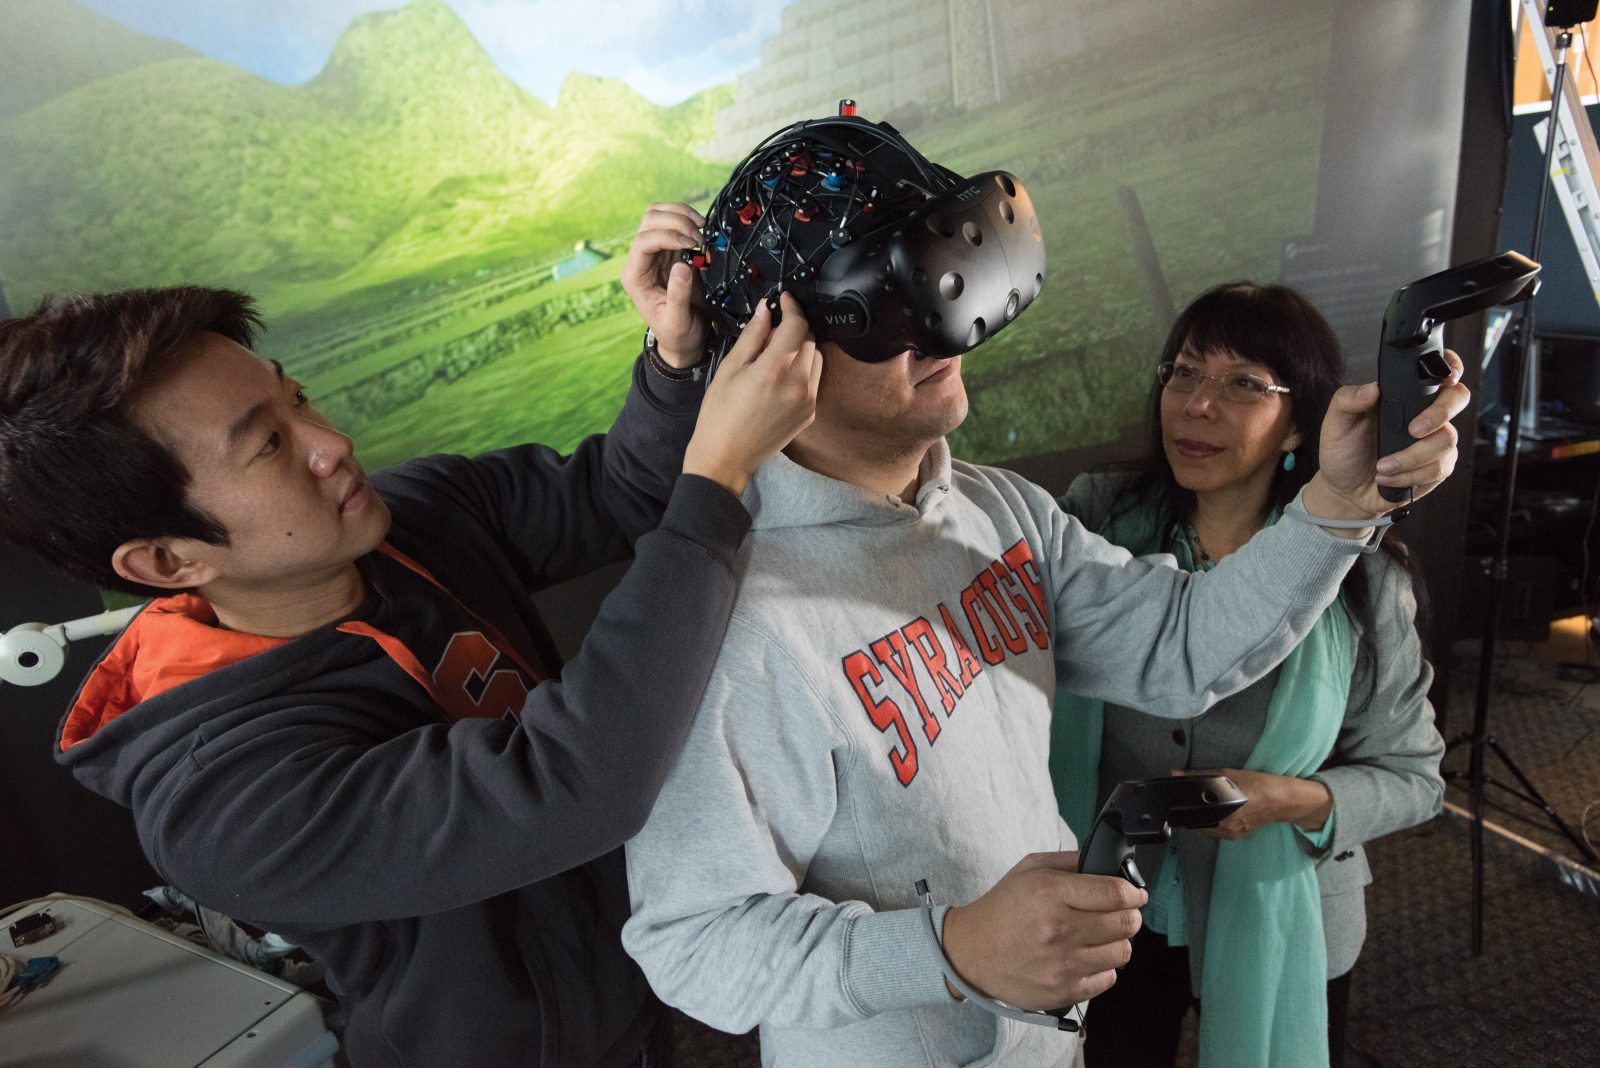 syracuse student using a virtual reality headset